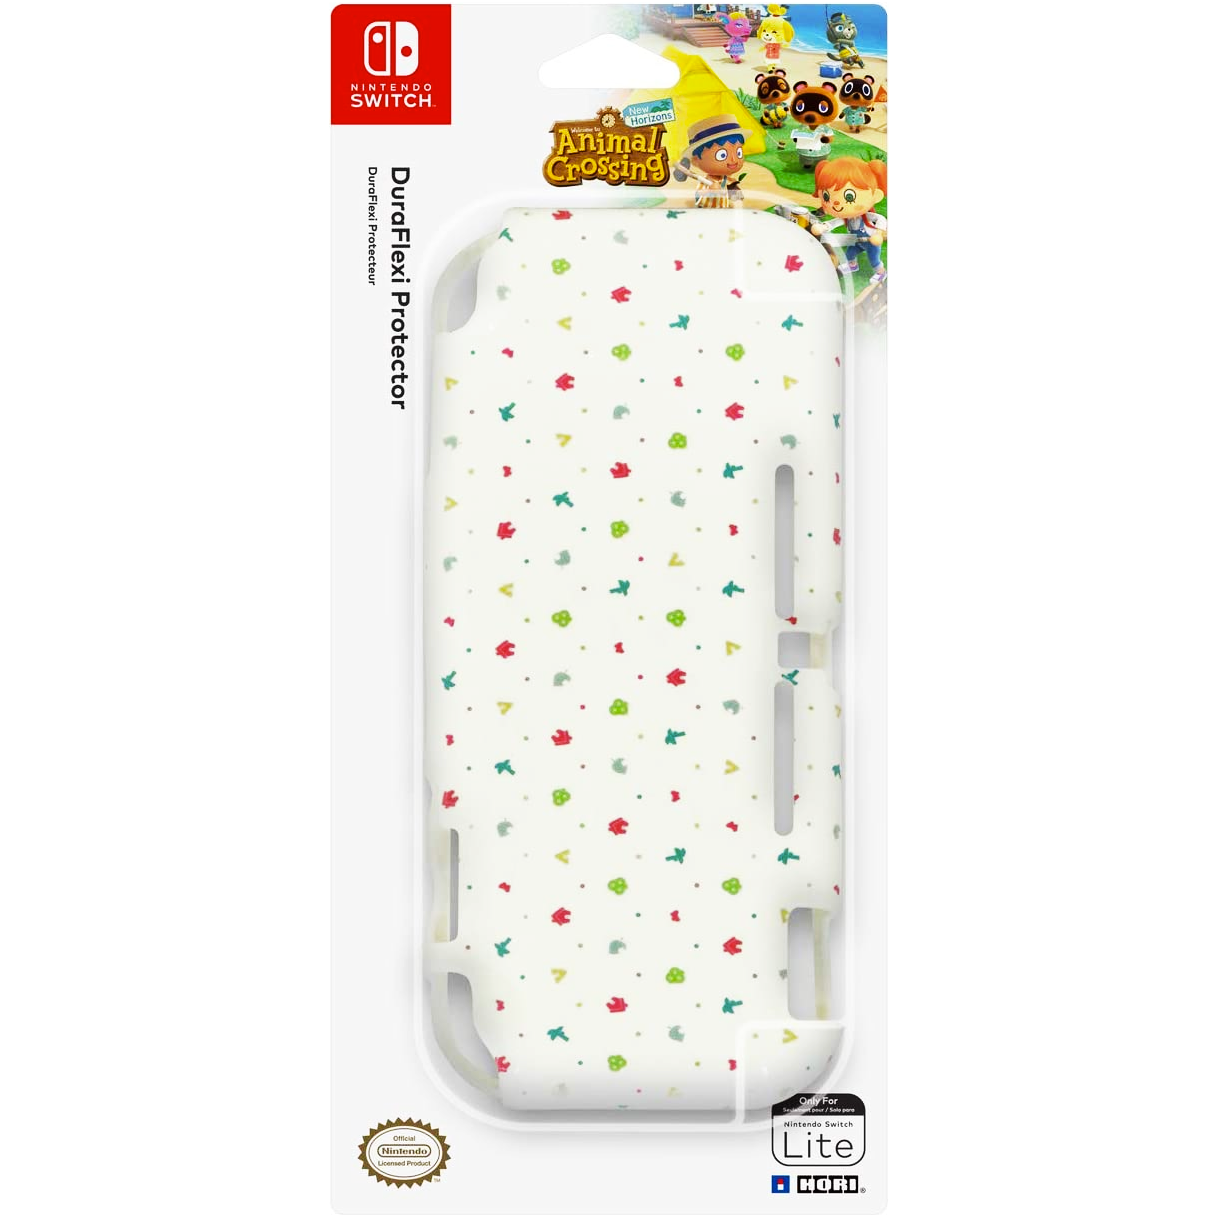 Carcasa protectora Animal Crossing para Nintendo Switch Lite